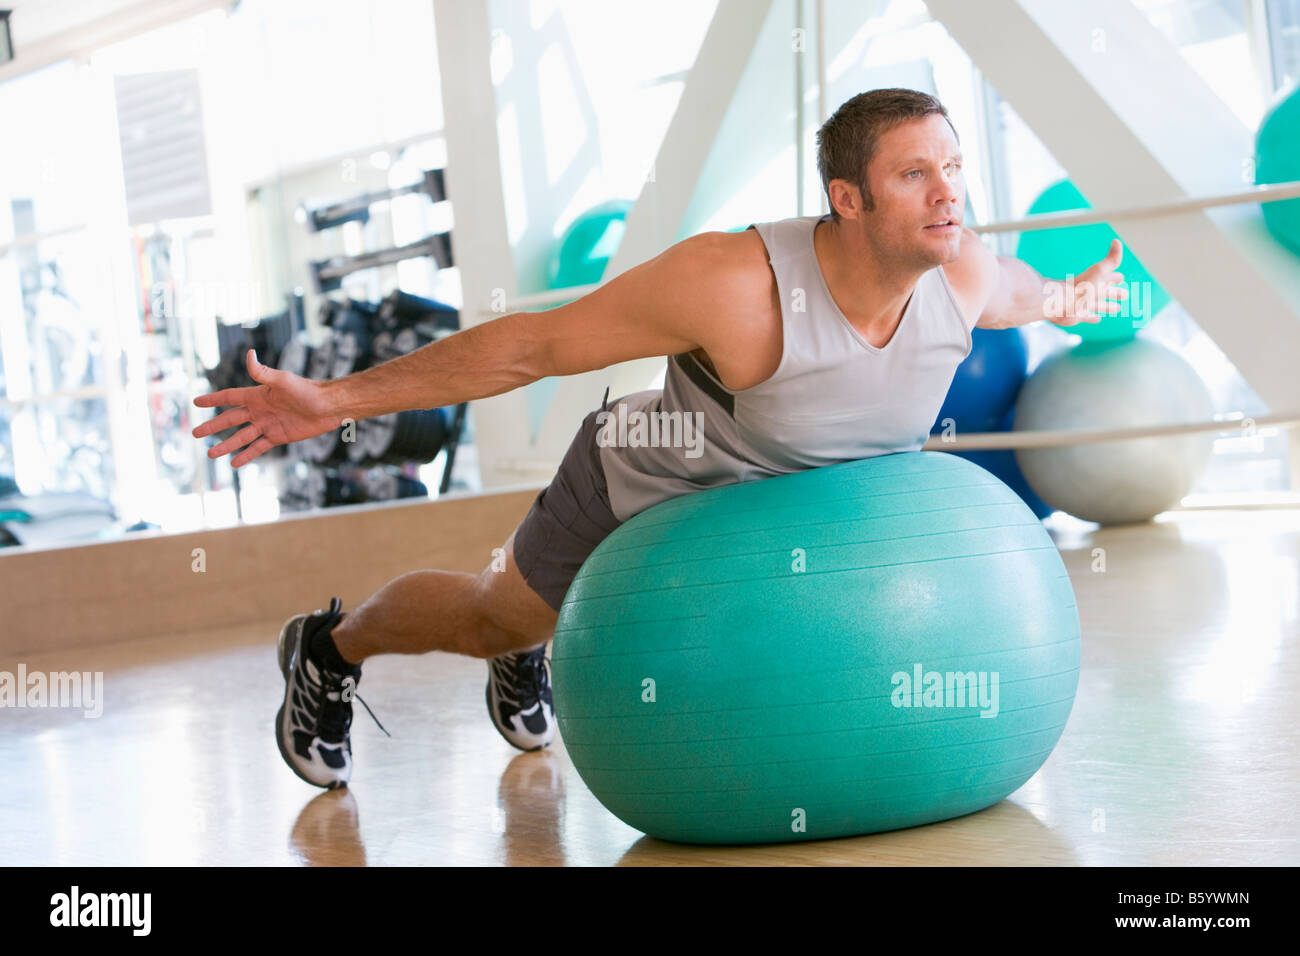 Man Balancing On Swiss Ball At Gym Stock Photo